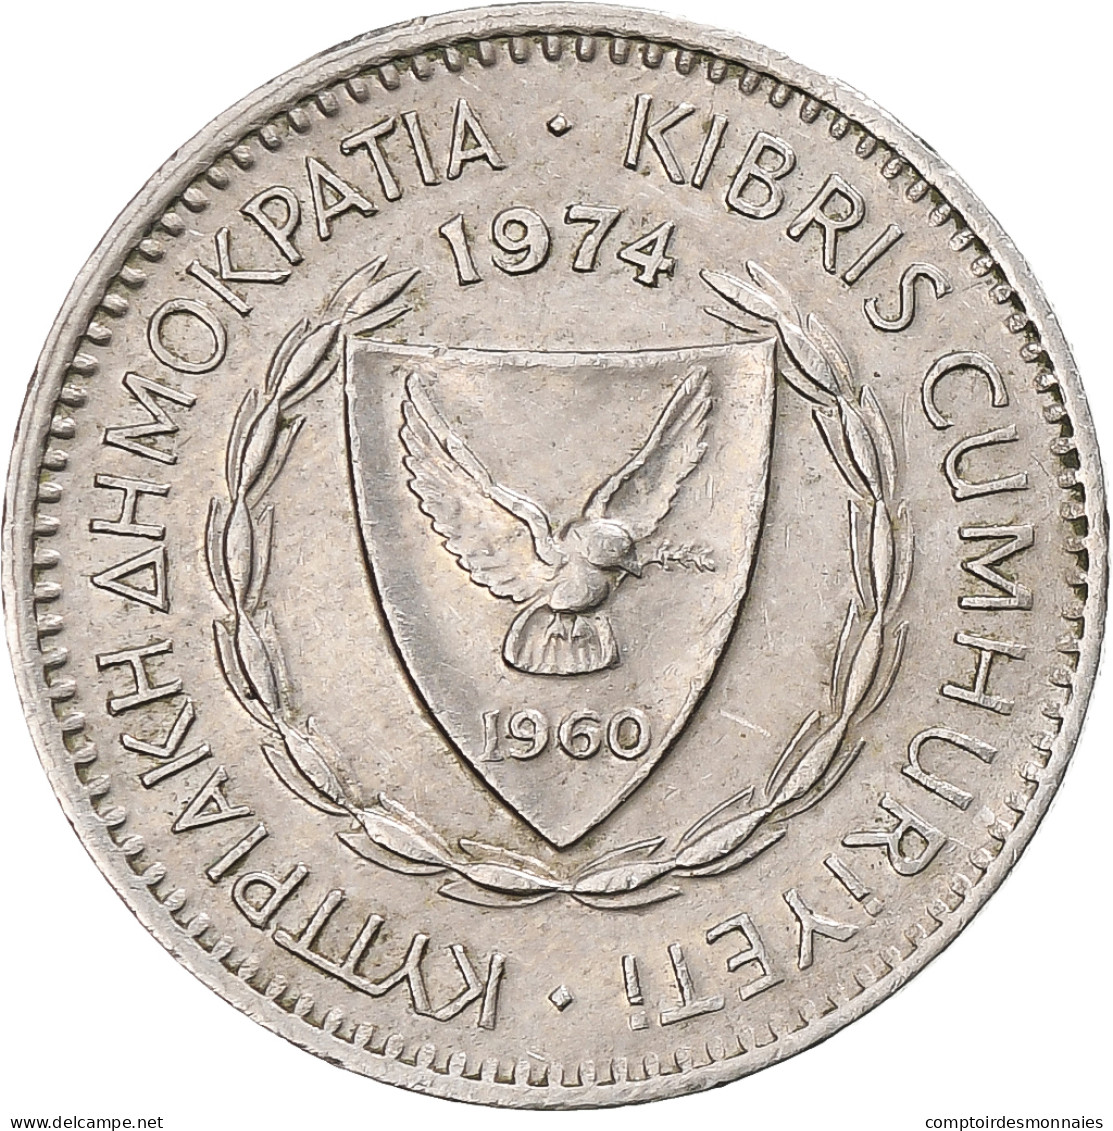 Chypre, 25 Cents, 1974 - Chypre